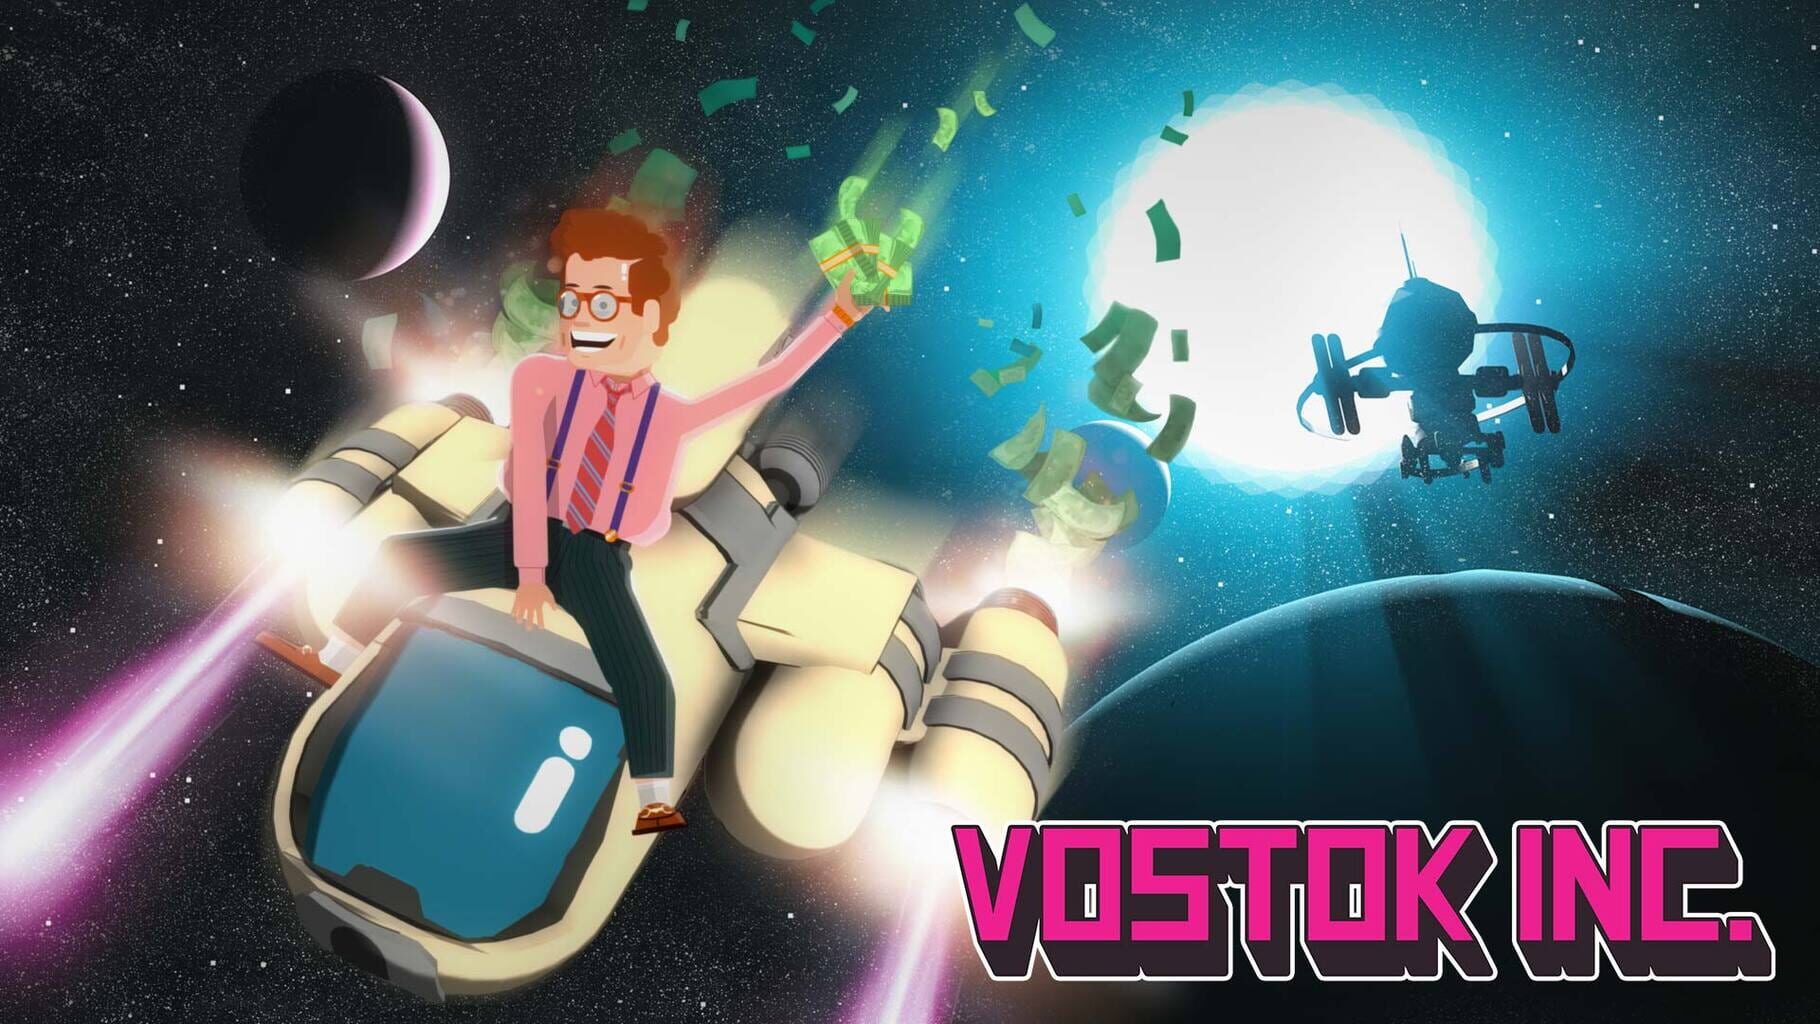 Vostok Inc. artwork